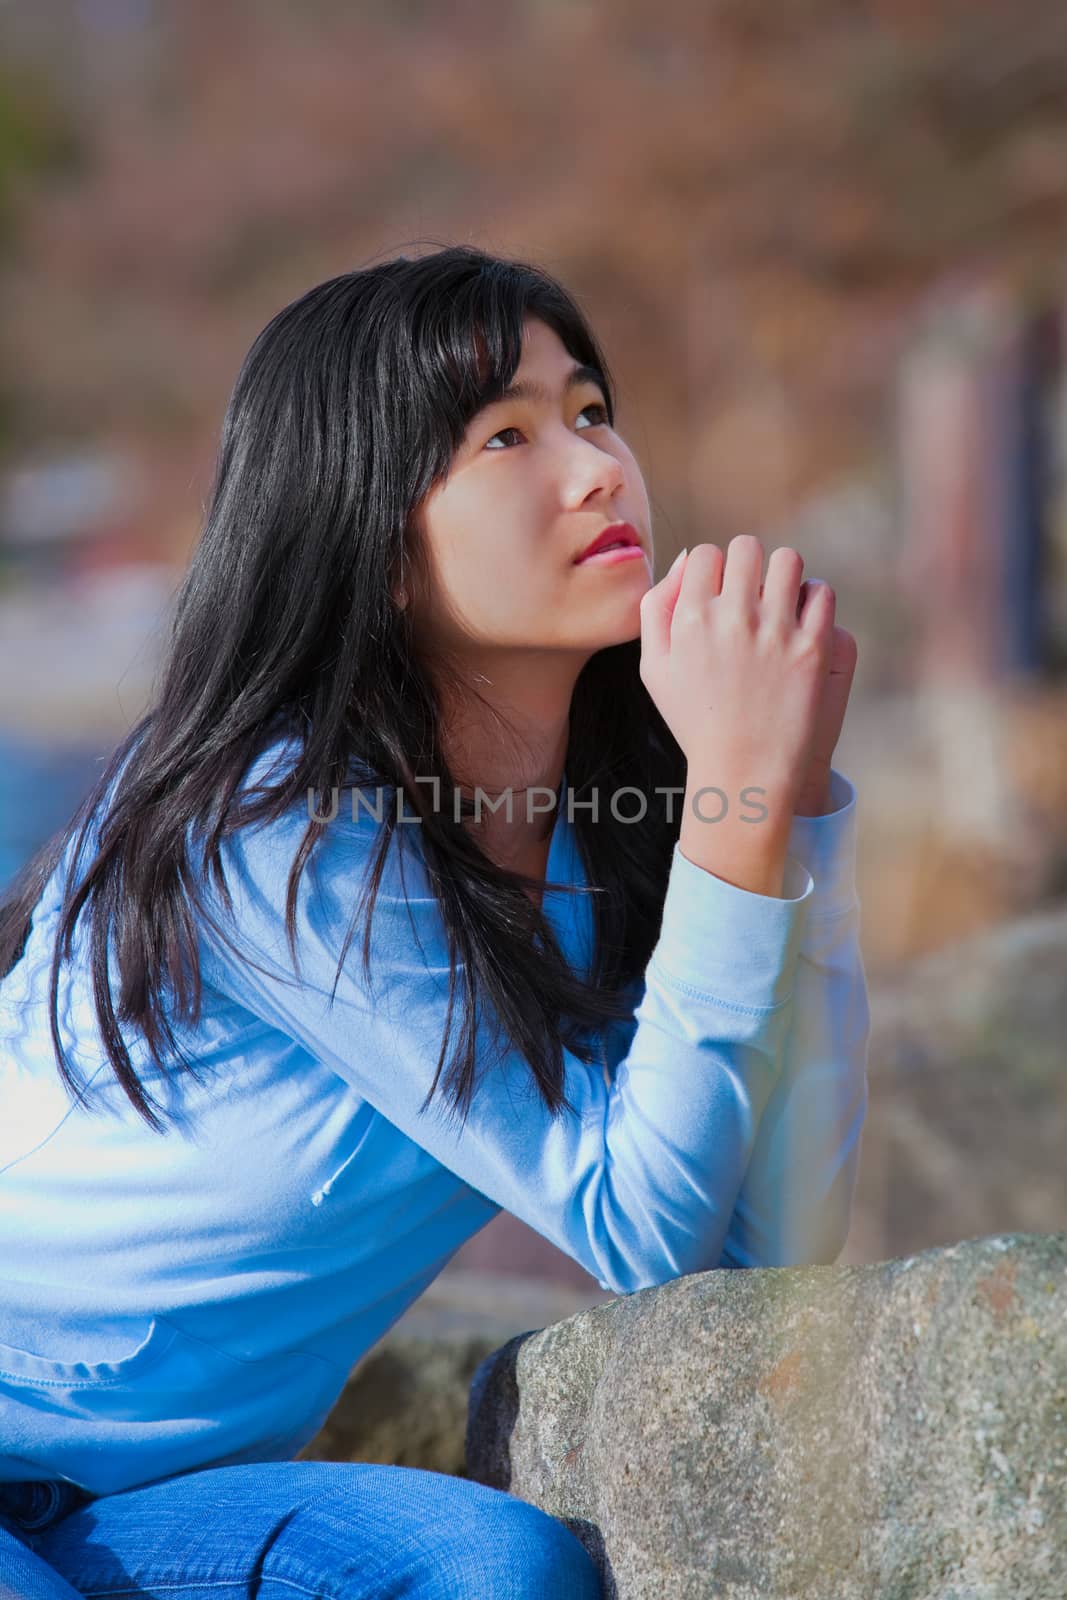 Young teen girl sitting outdoors on rocks praying by jarenwicklund